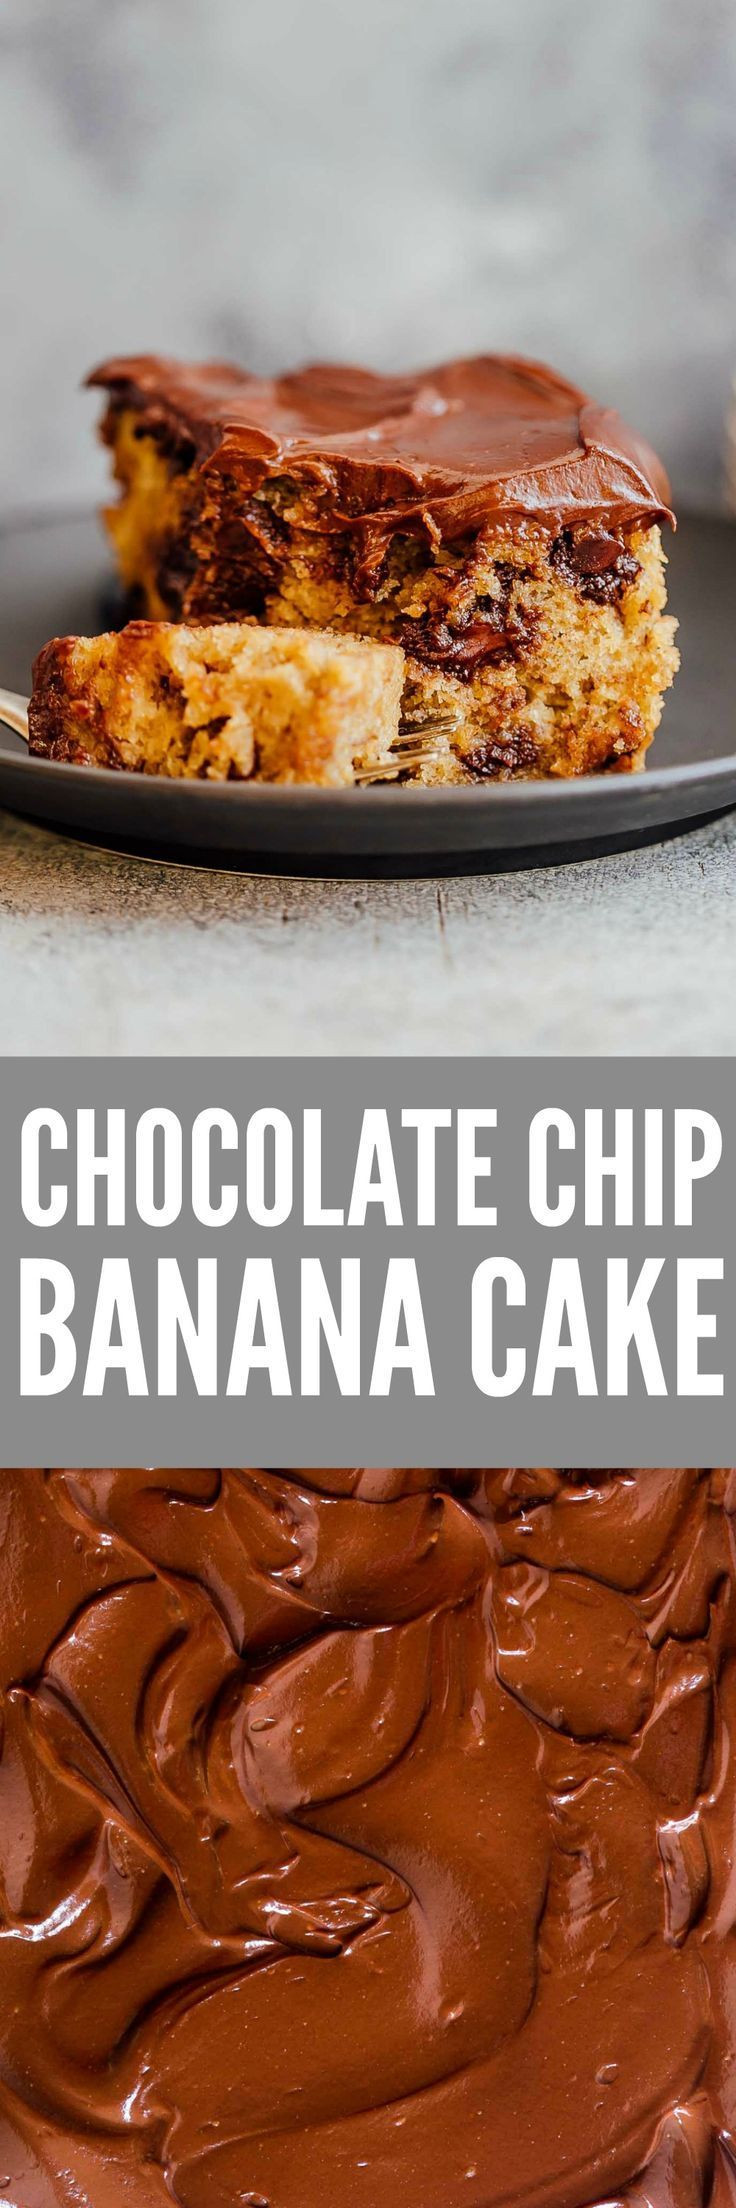 Thanksgiving Desserts 2019
 Chocolate Chip Banana Cake